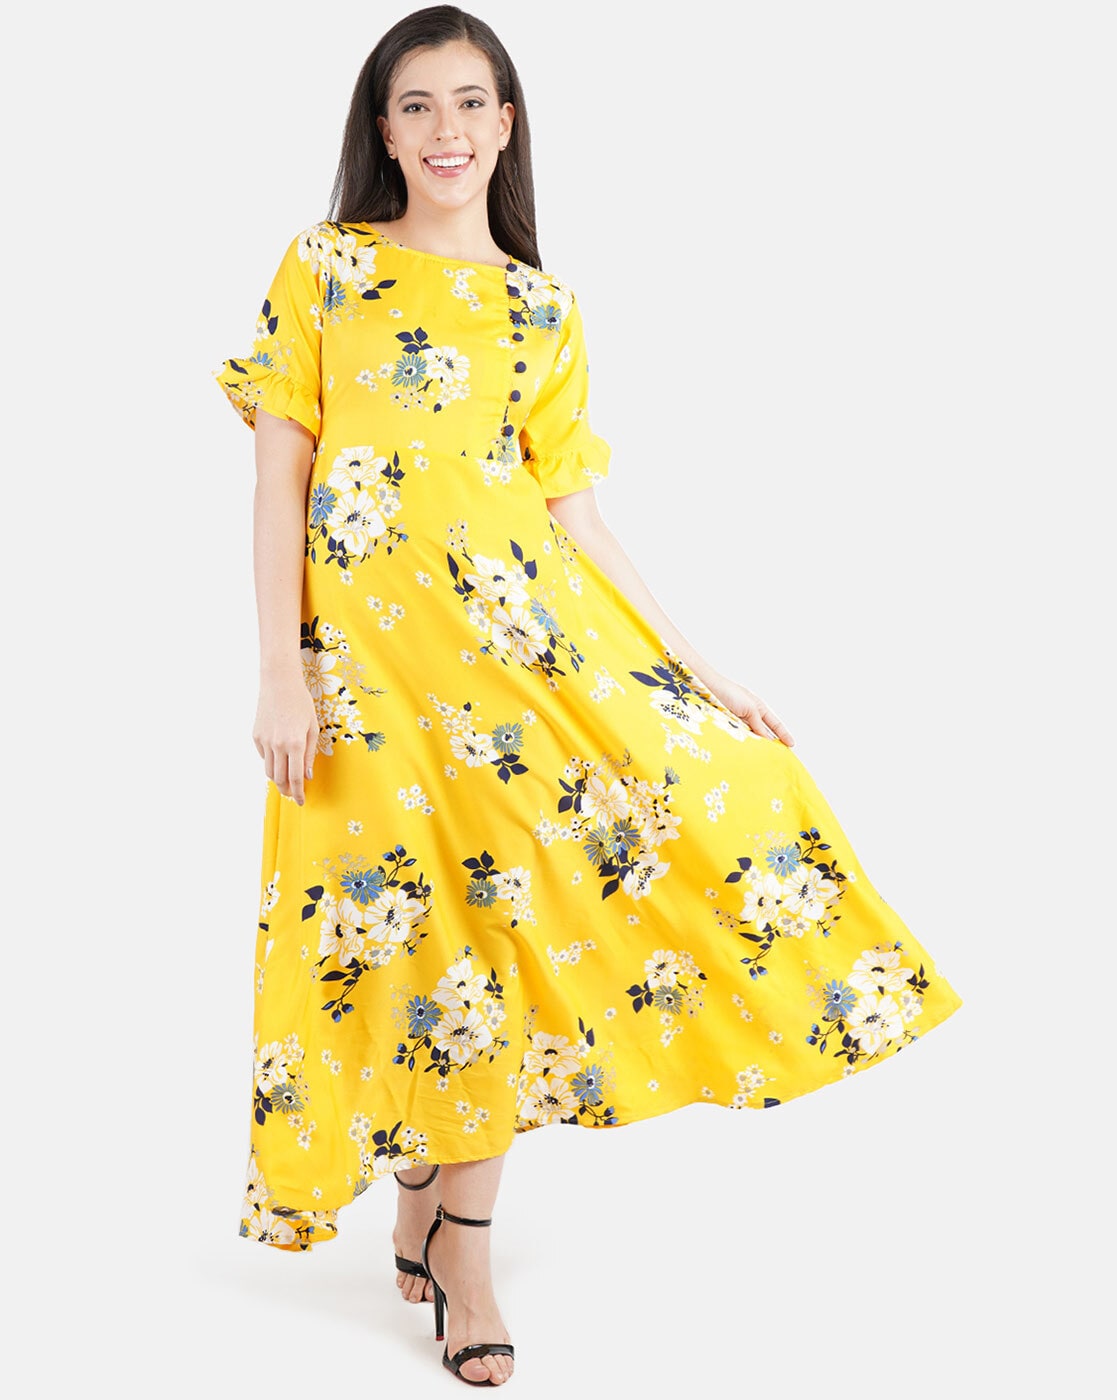 yellow dresses for women